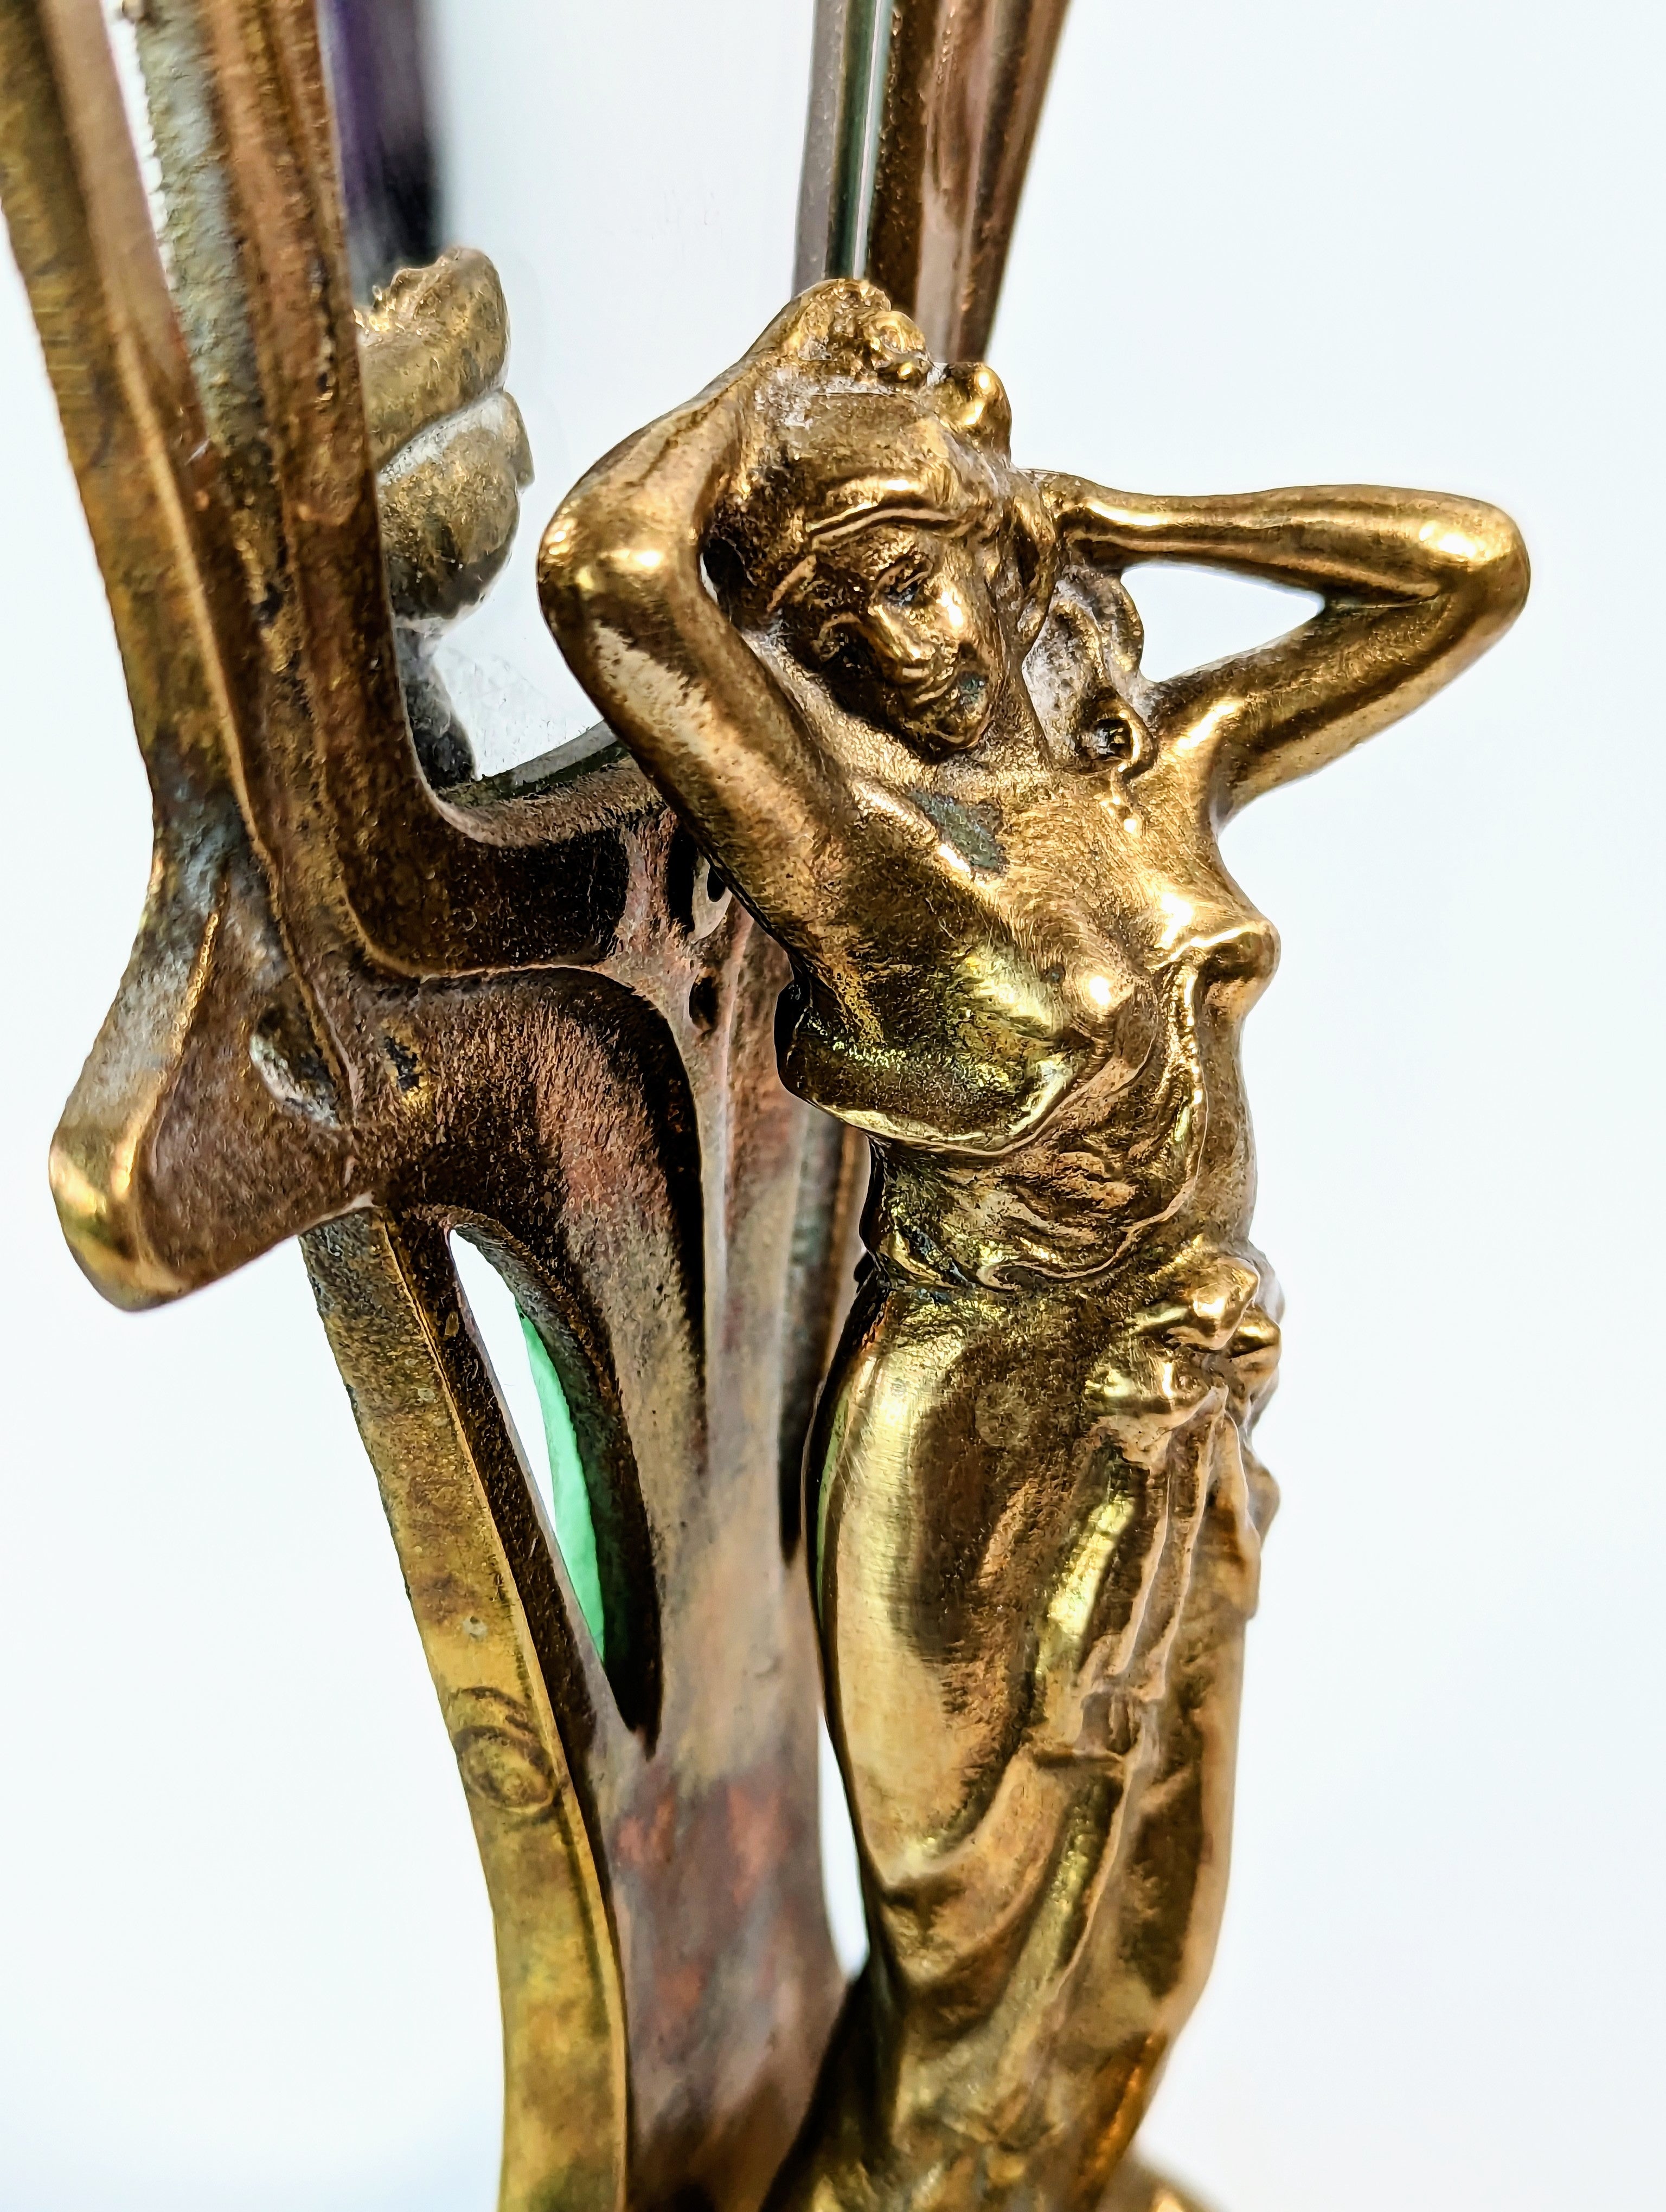 Art Nouveau Vintage Brass Vanity Mirror